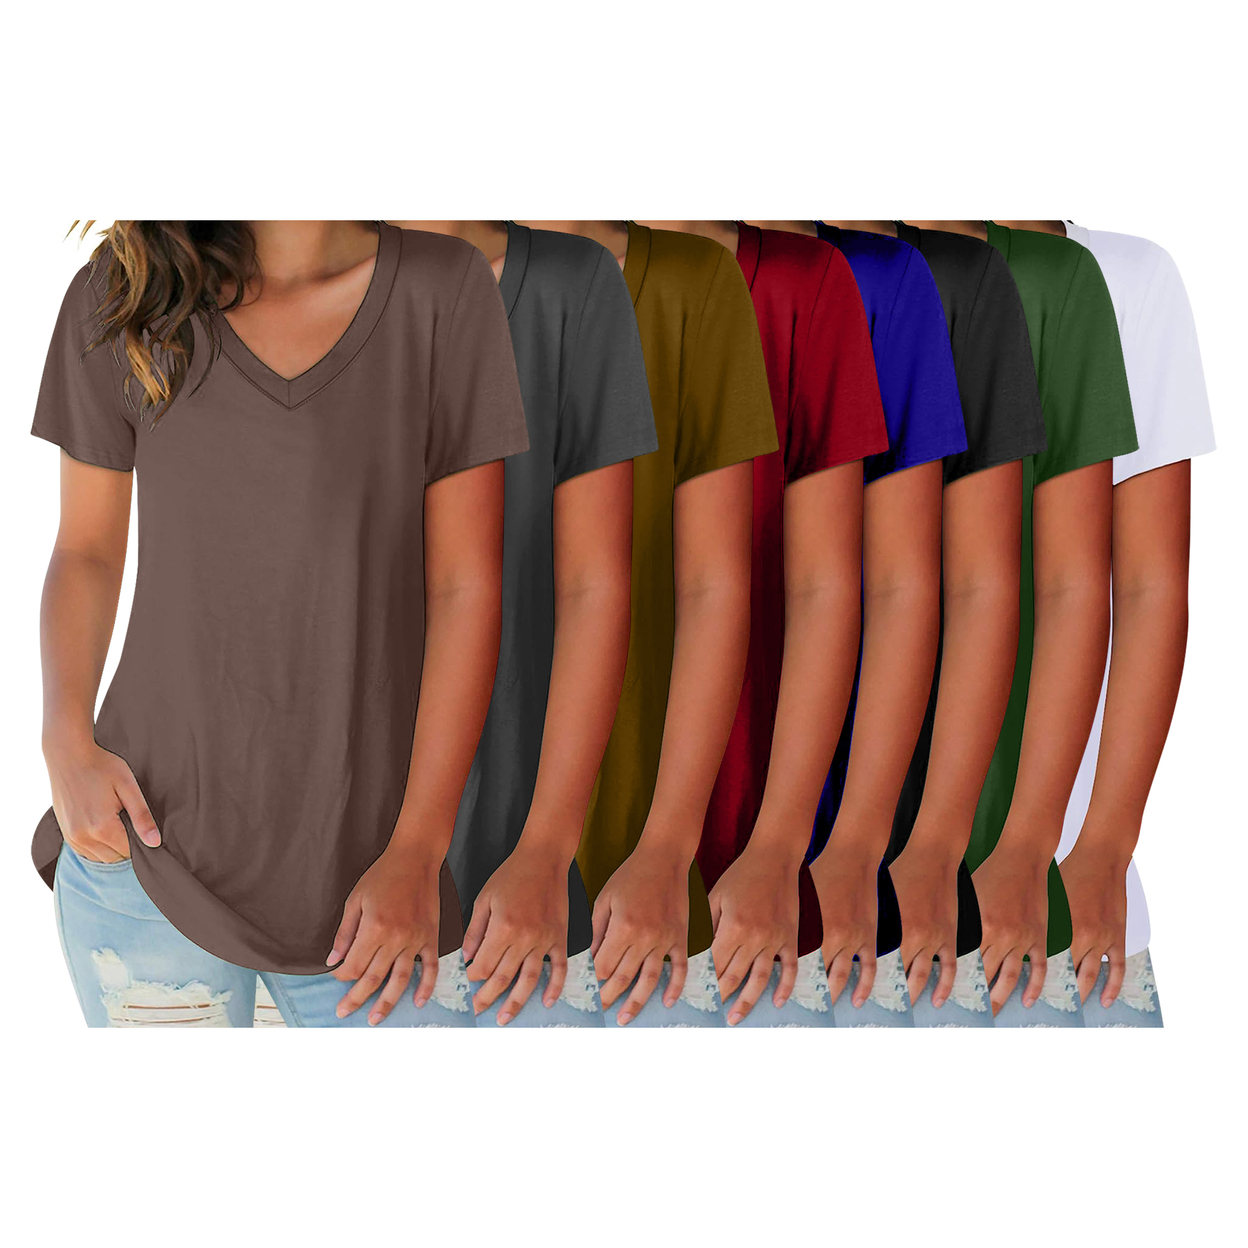 2-Pack: Women's Ultra Soft Smooth Cotton Blend Basic V-Neck Short Sleeve Shirts - Black & Red, Medium